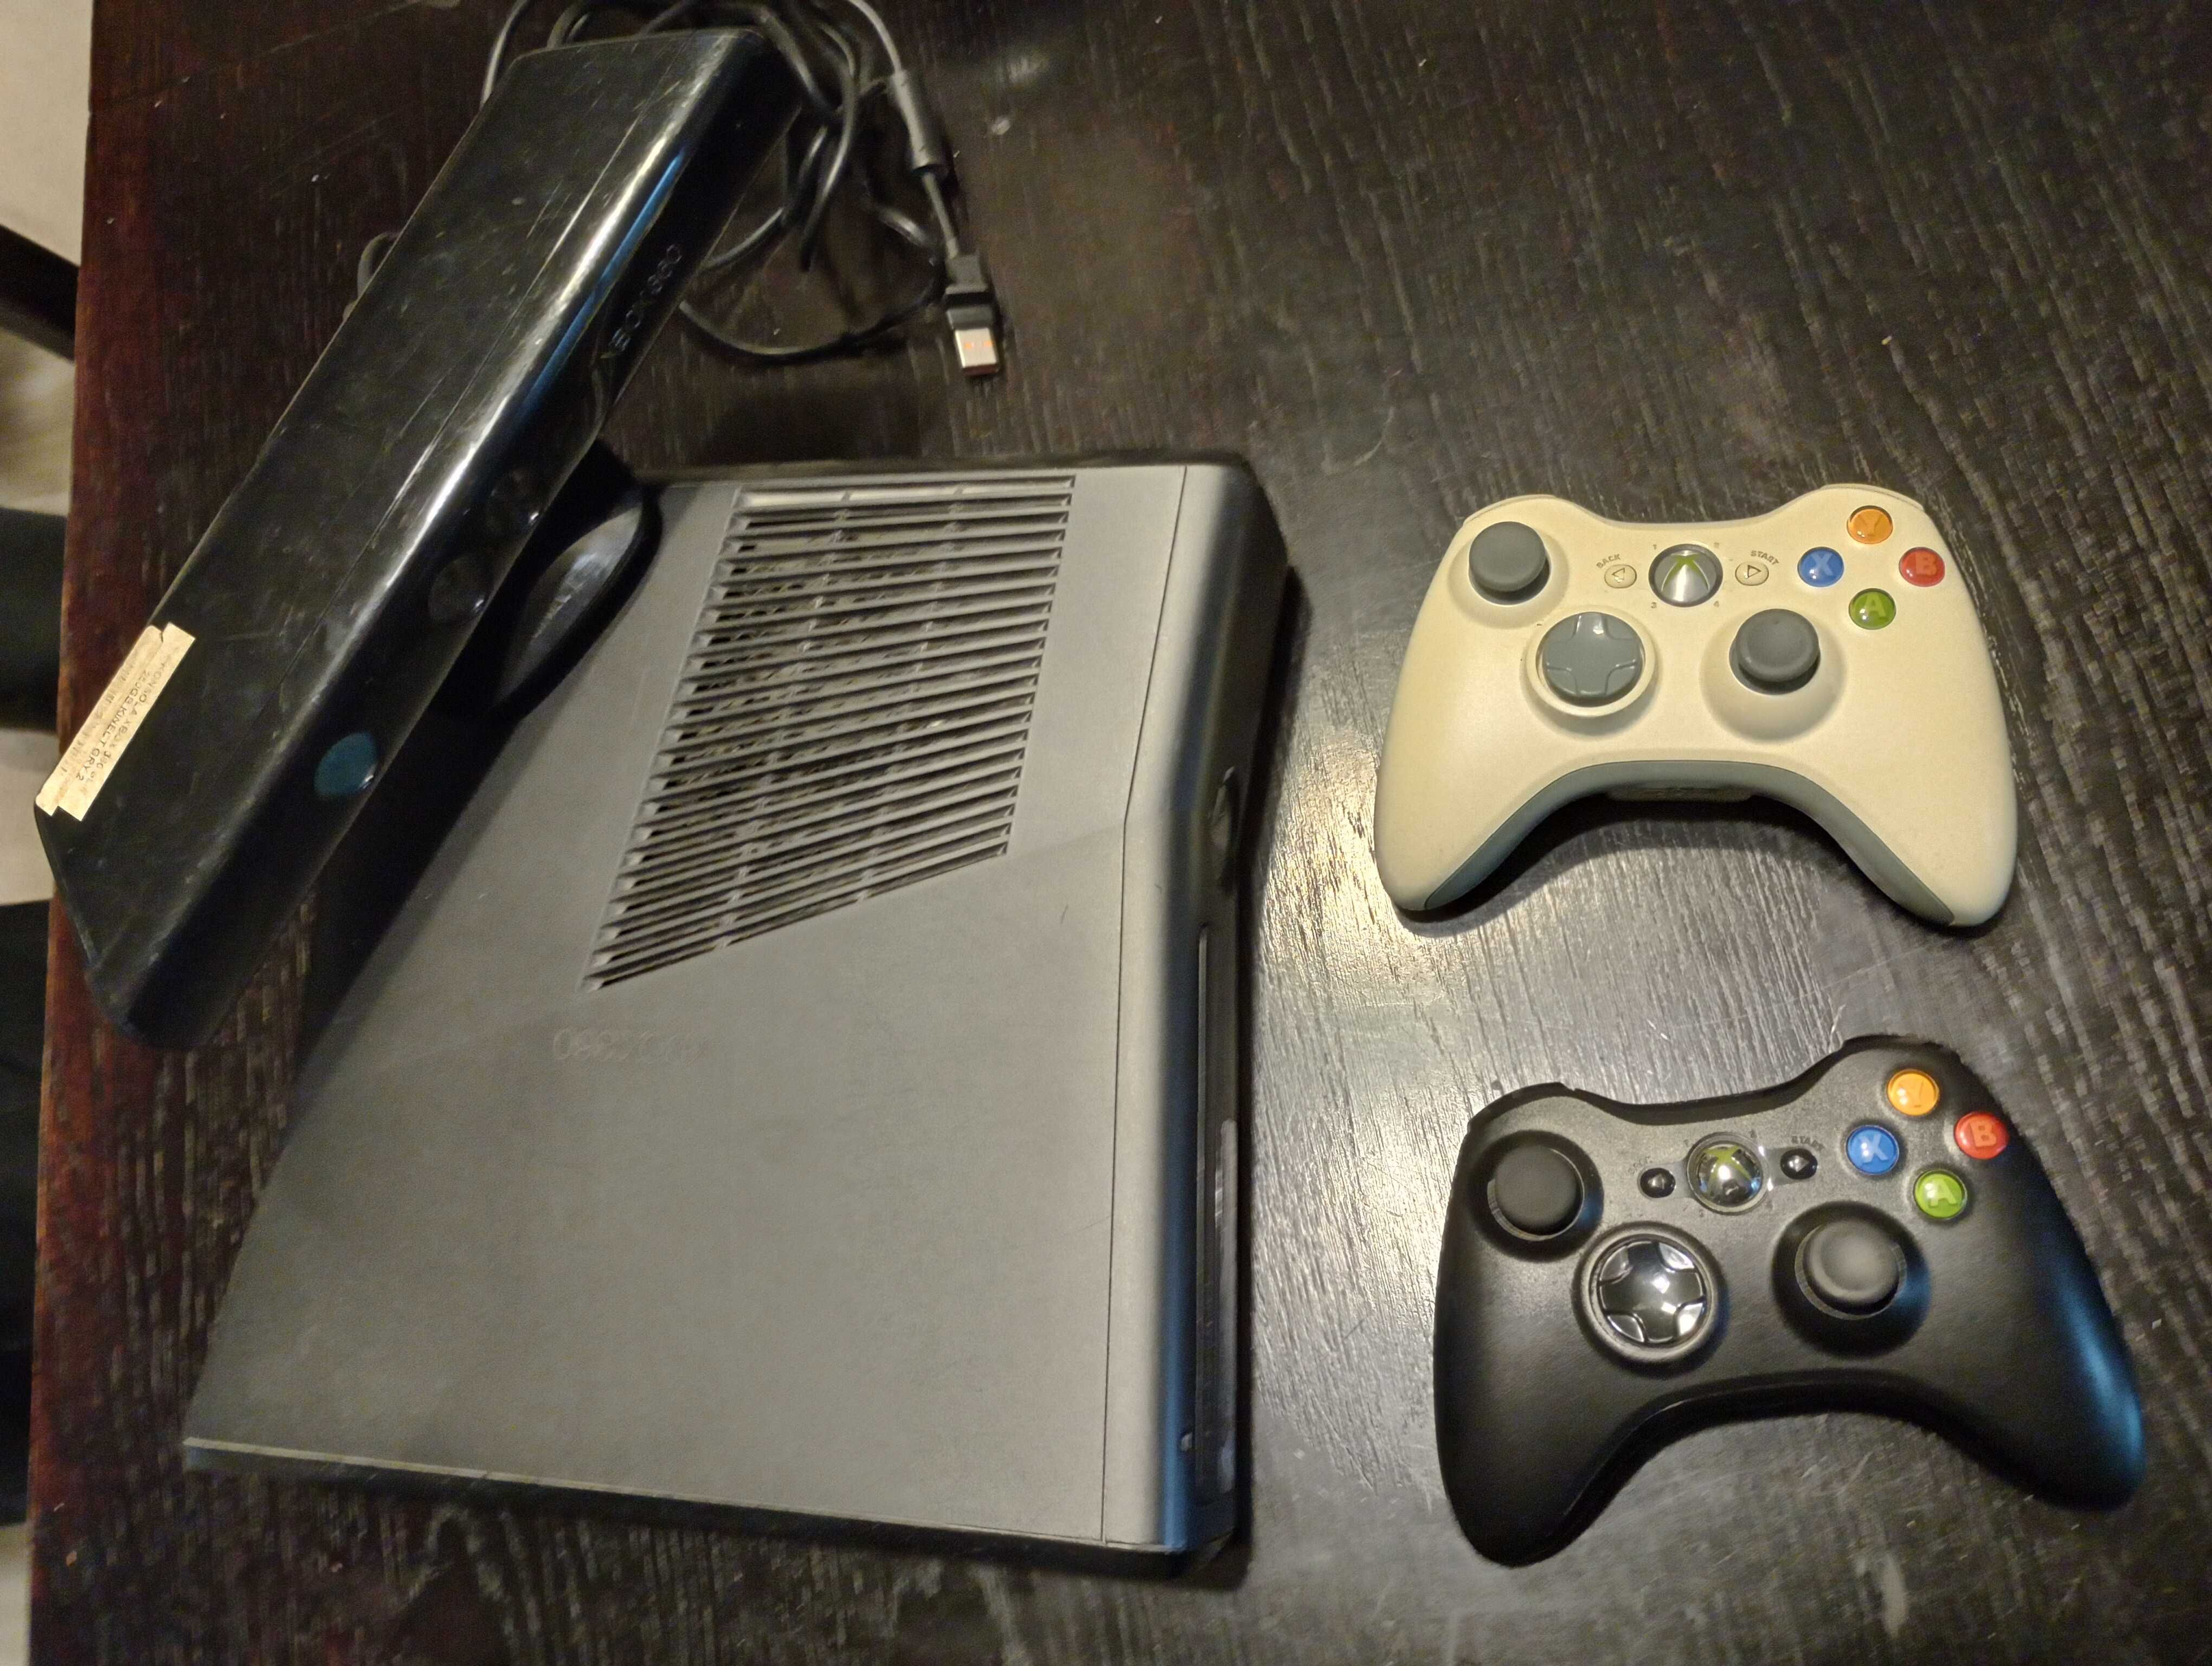 Xbox 360 2 pady Kinect Ponad 20 gier